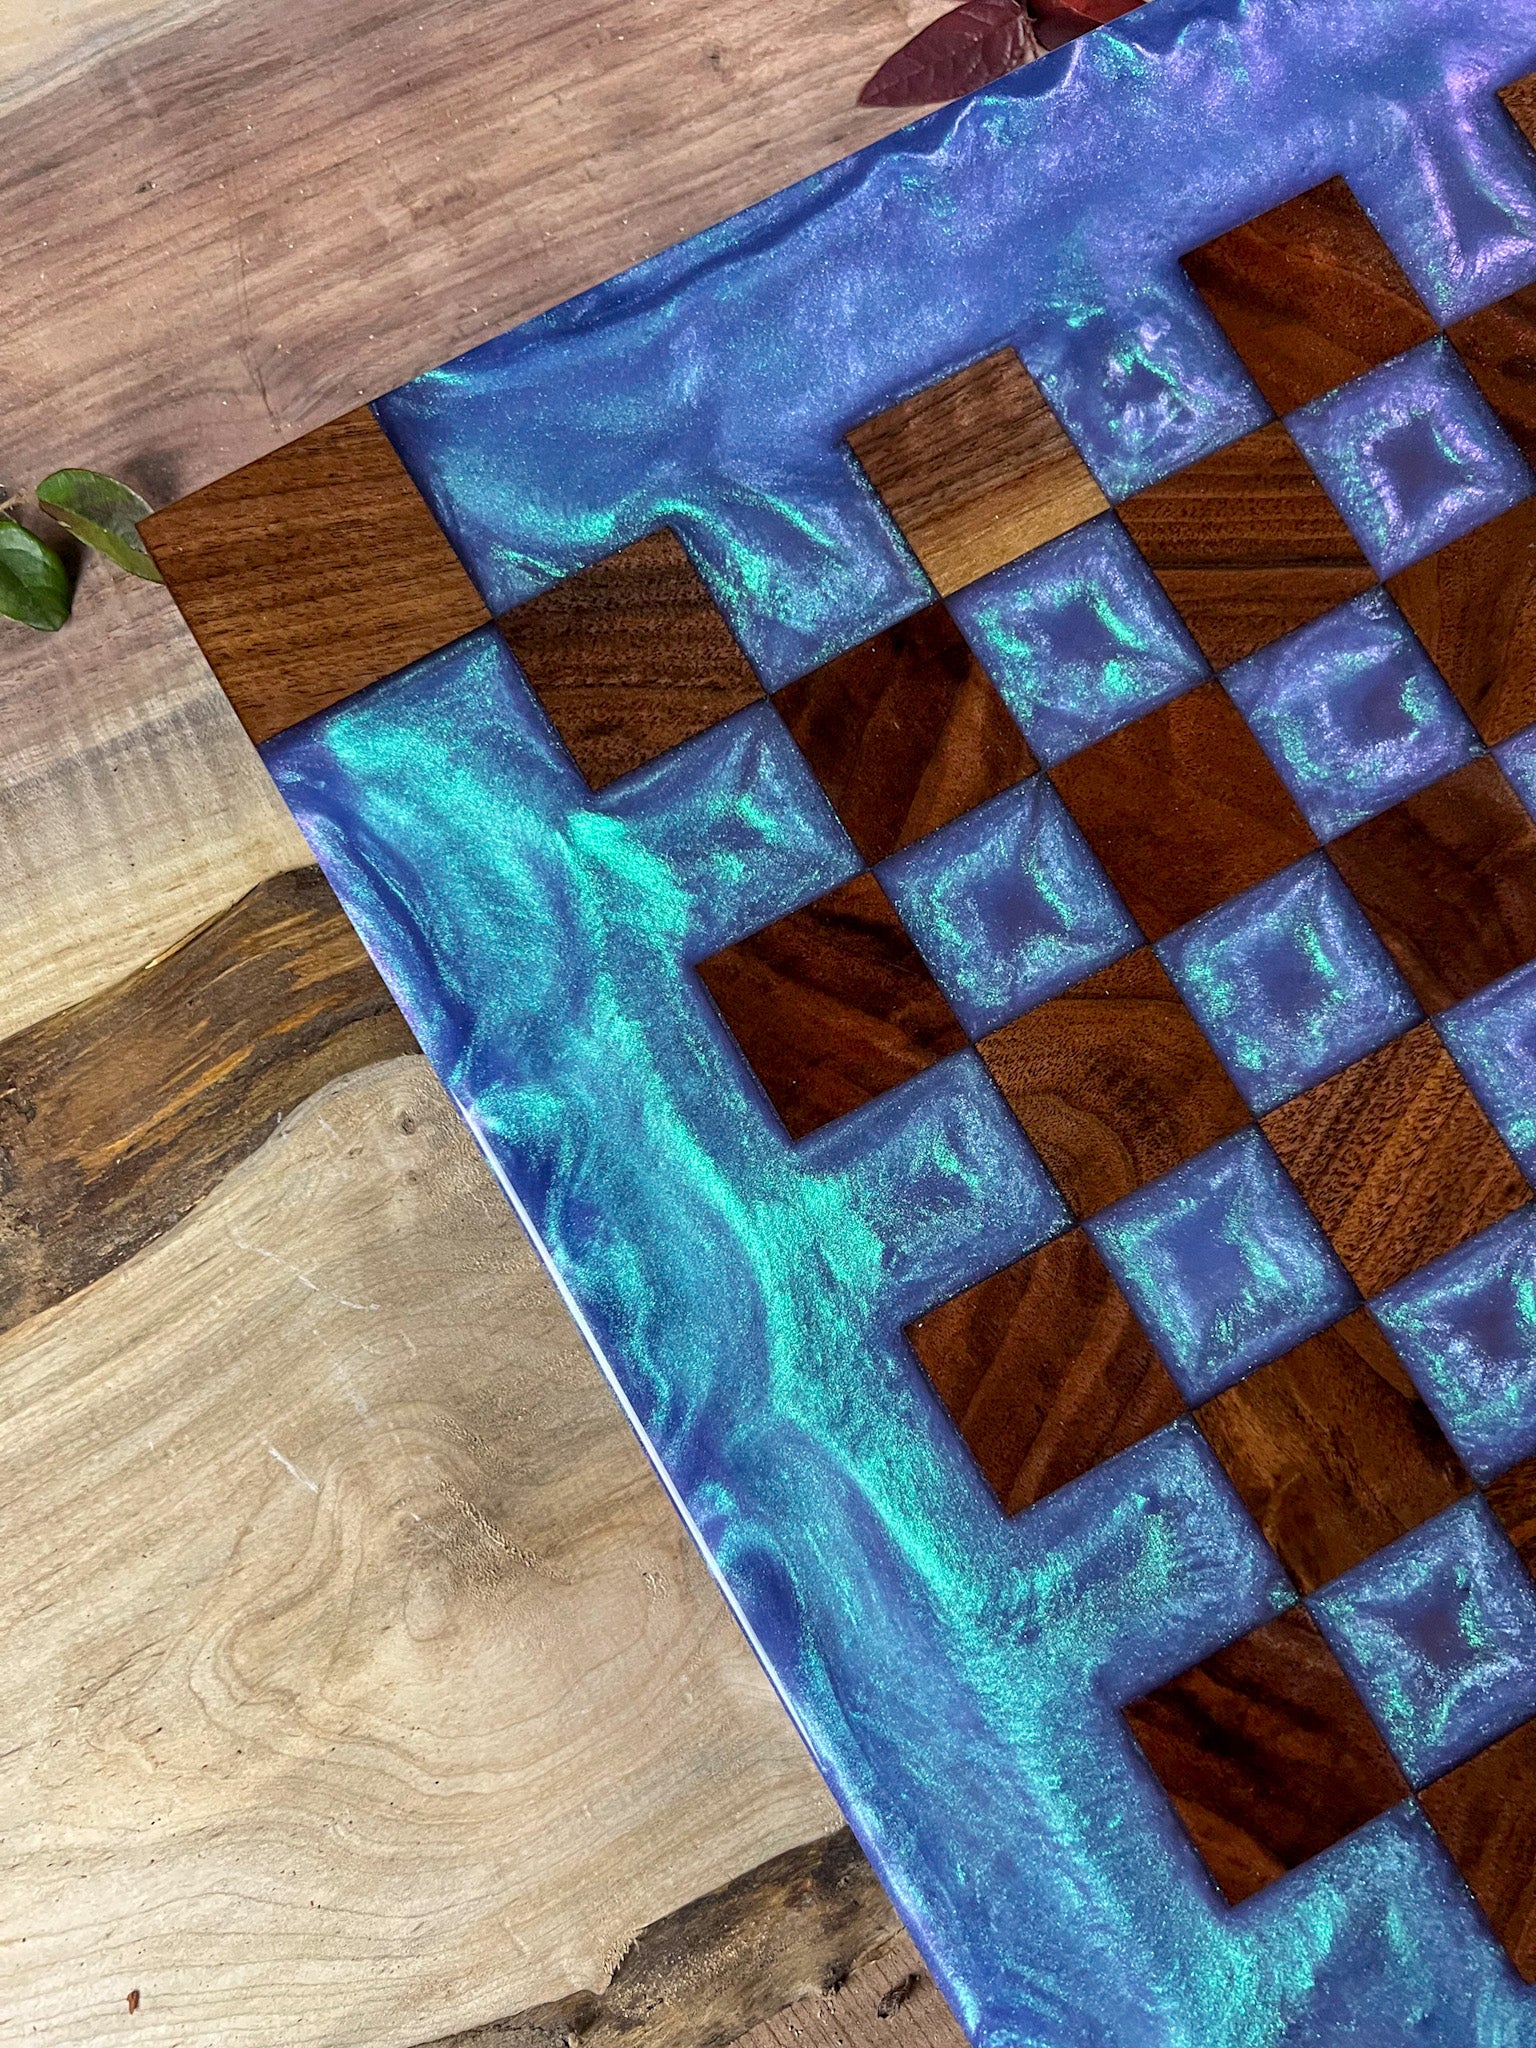 Merlin's Desire Walnut Chess Board (Chameleon Color Shifting)